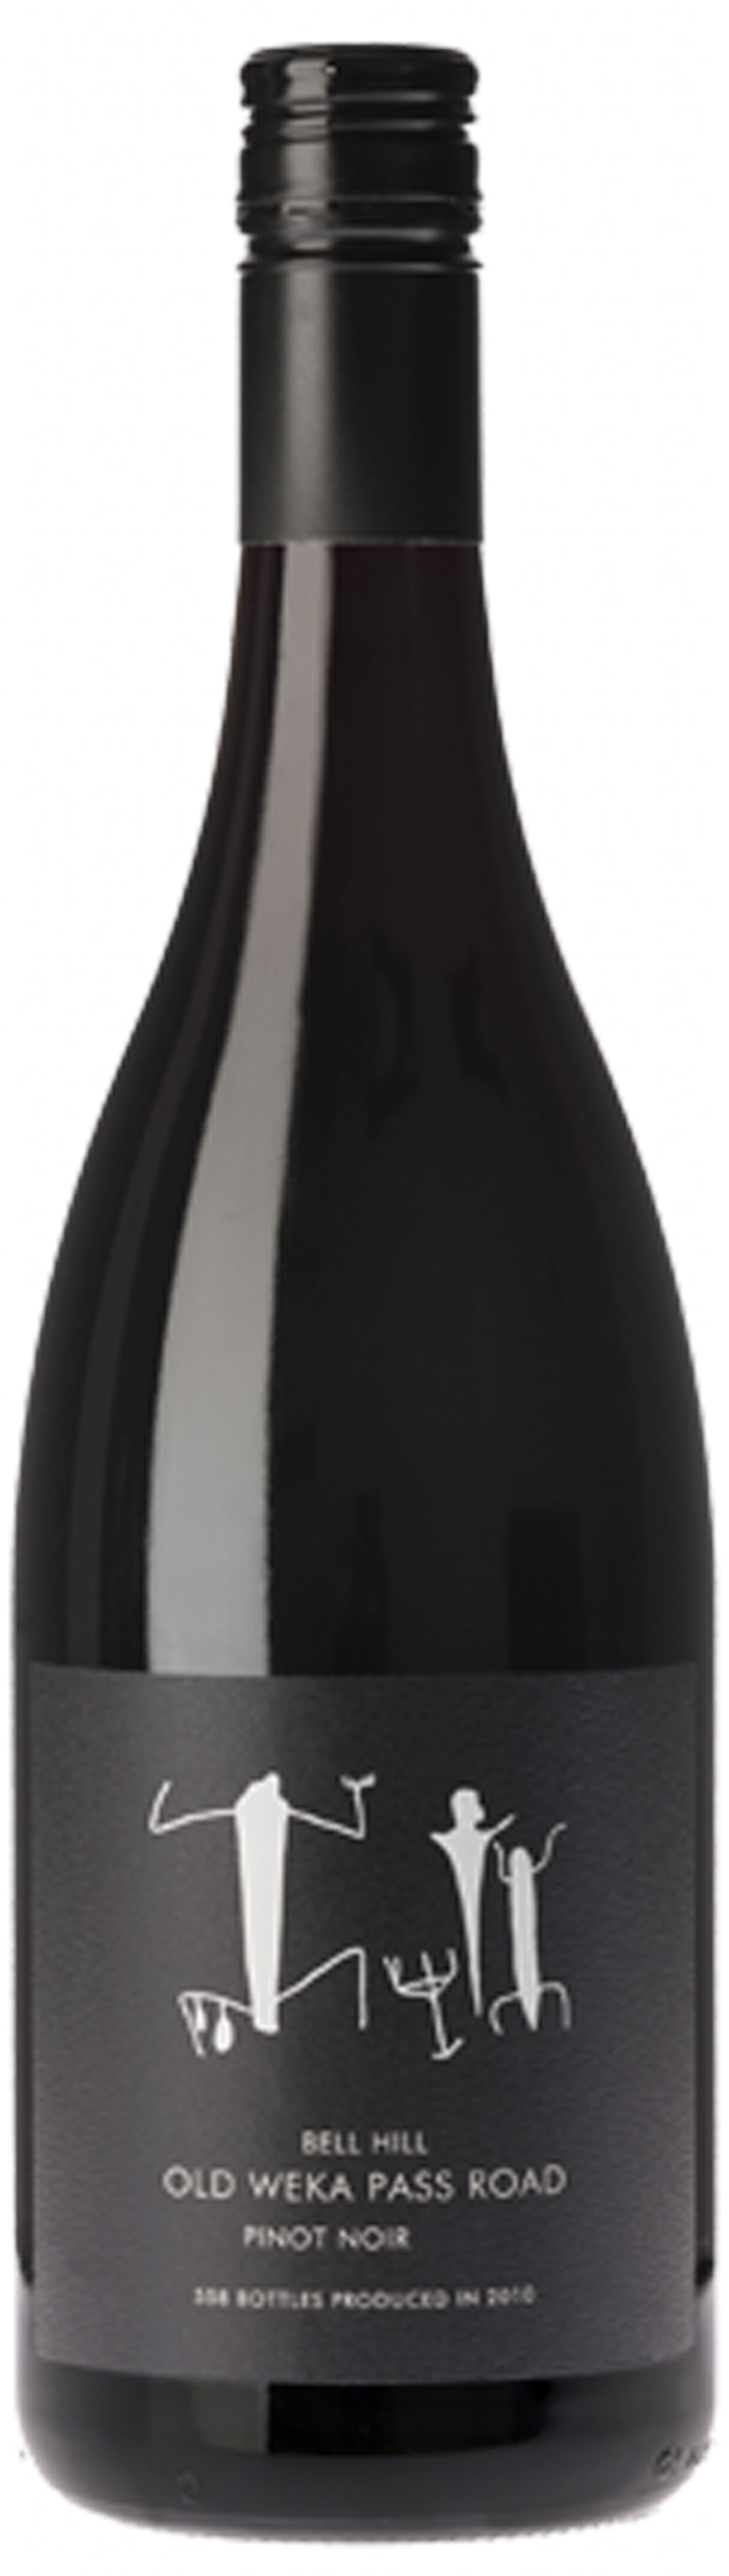 Bottle shot of 2011 Old Weka Pass Road Pinot Noir